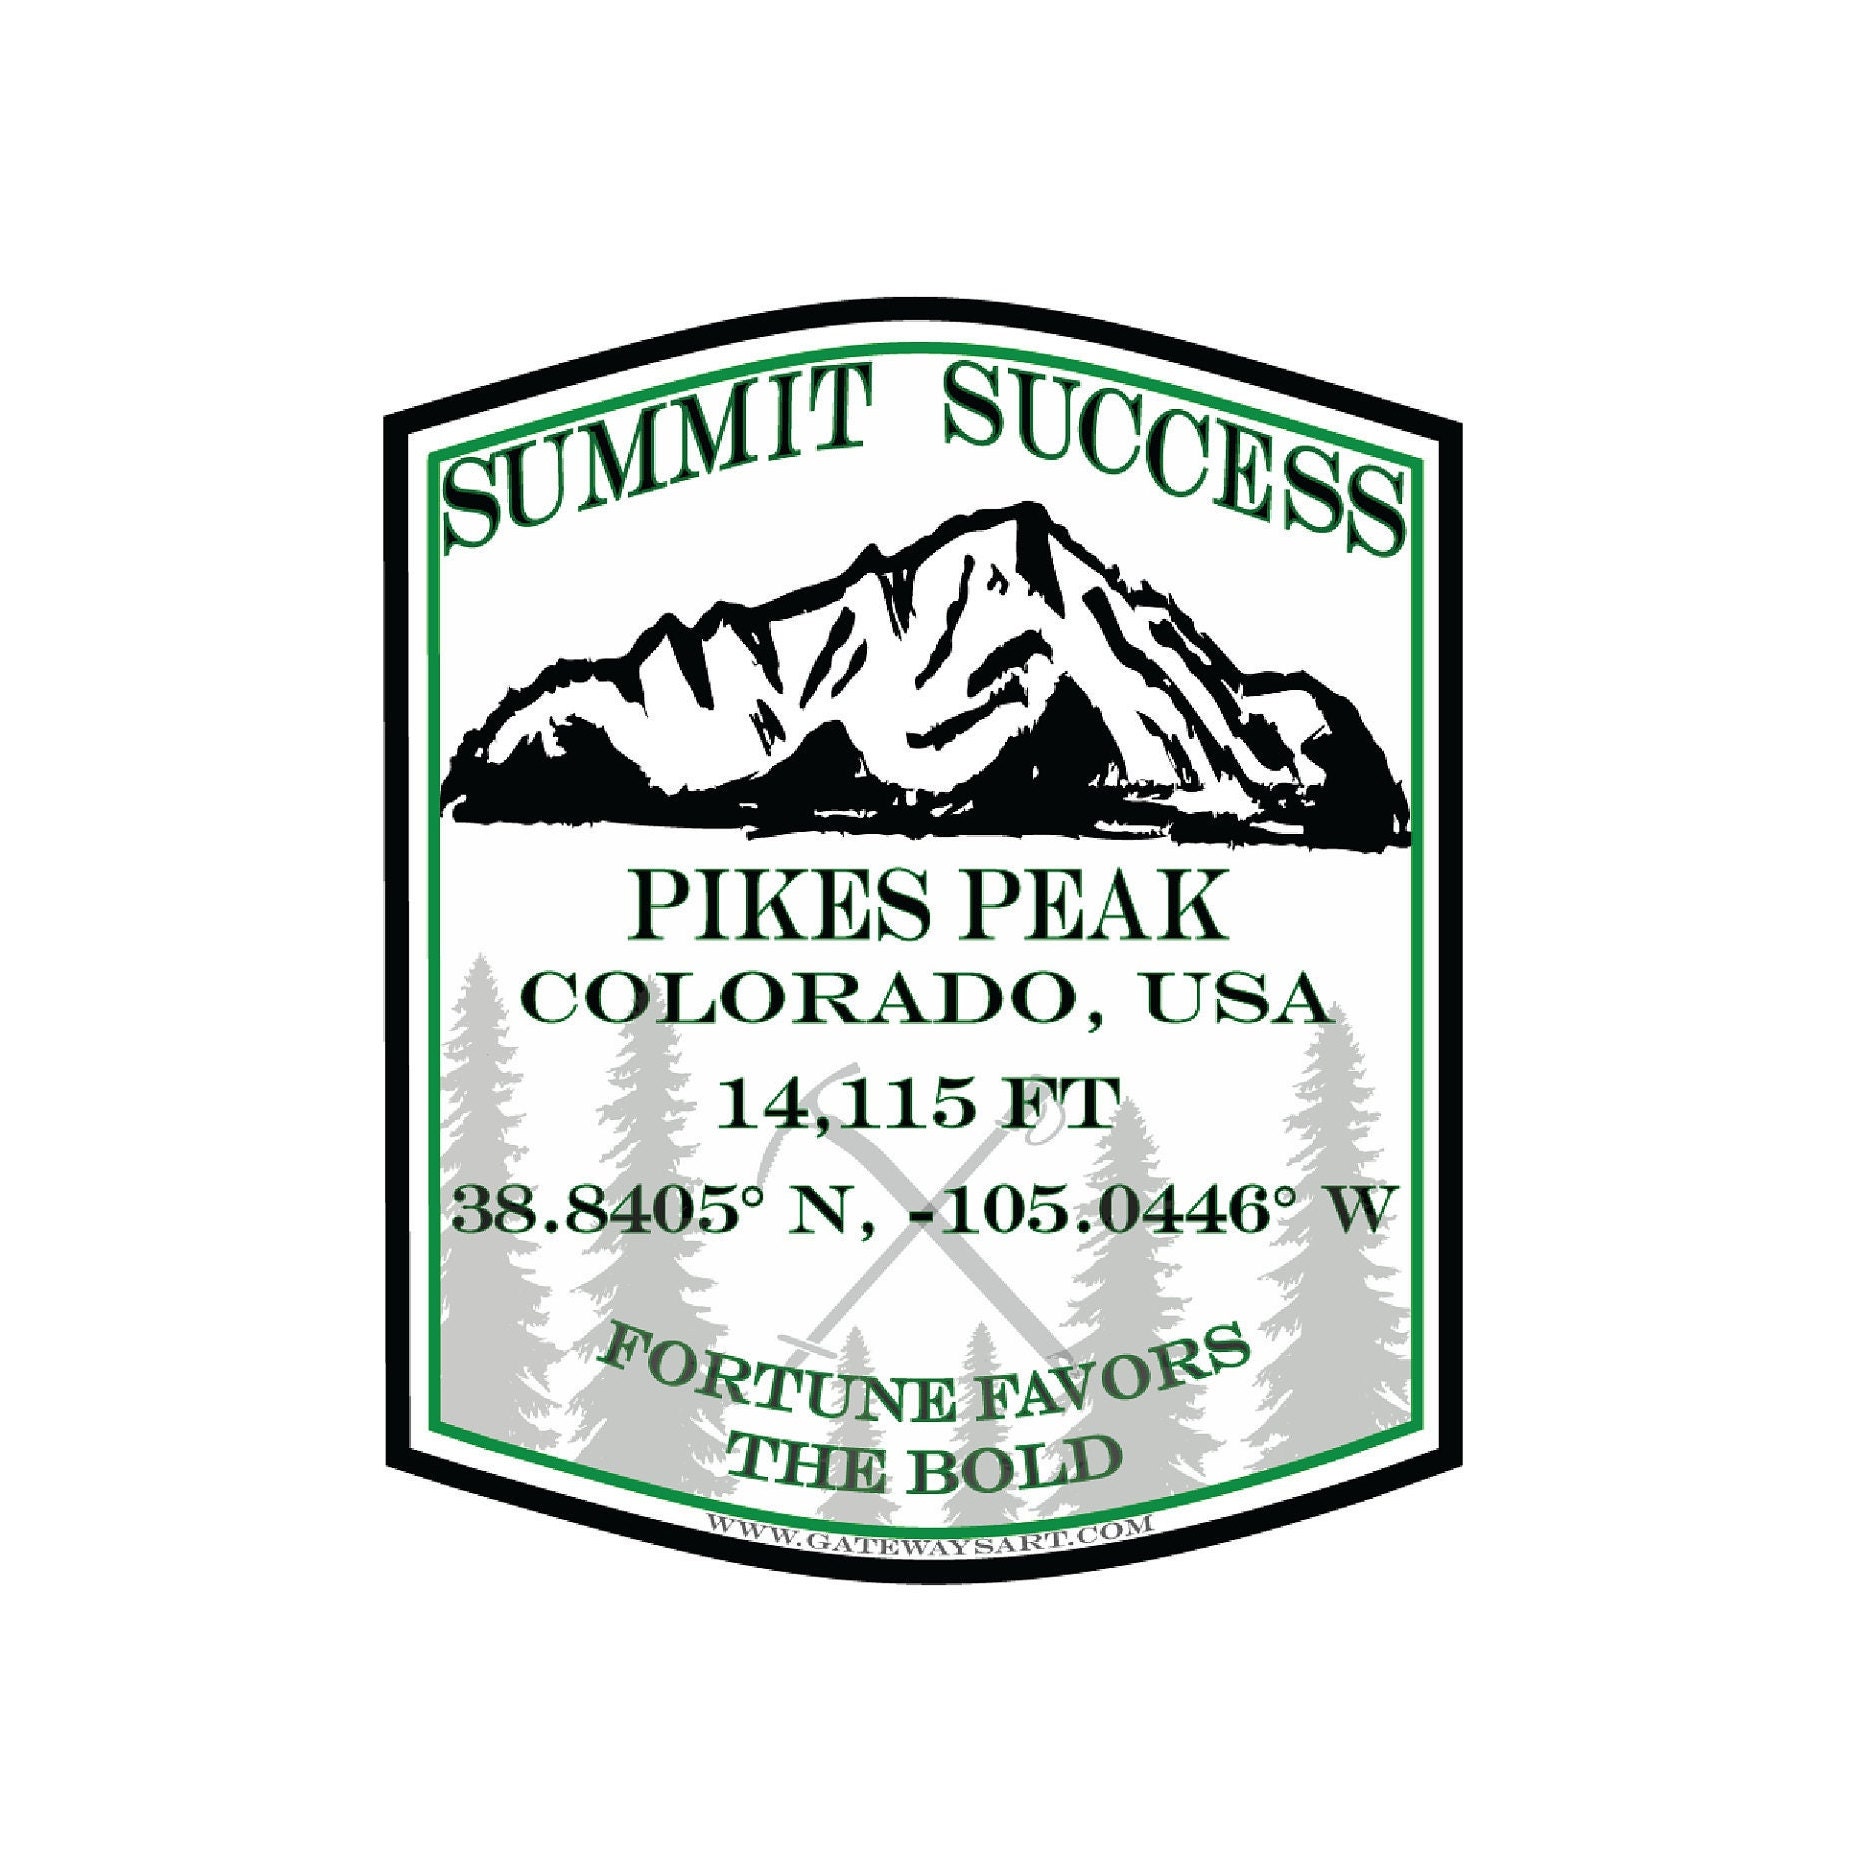 Pikes Peak Trail Colorado Oval car bumper sticker decal 5" x 3"